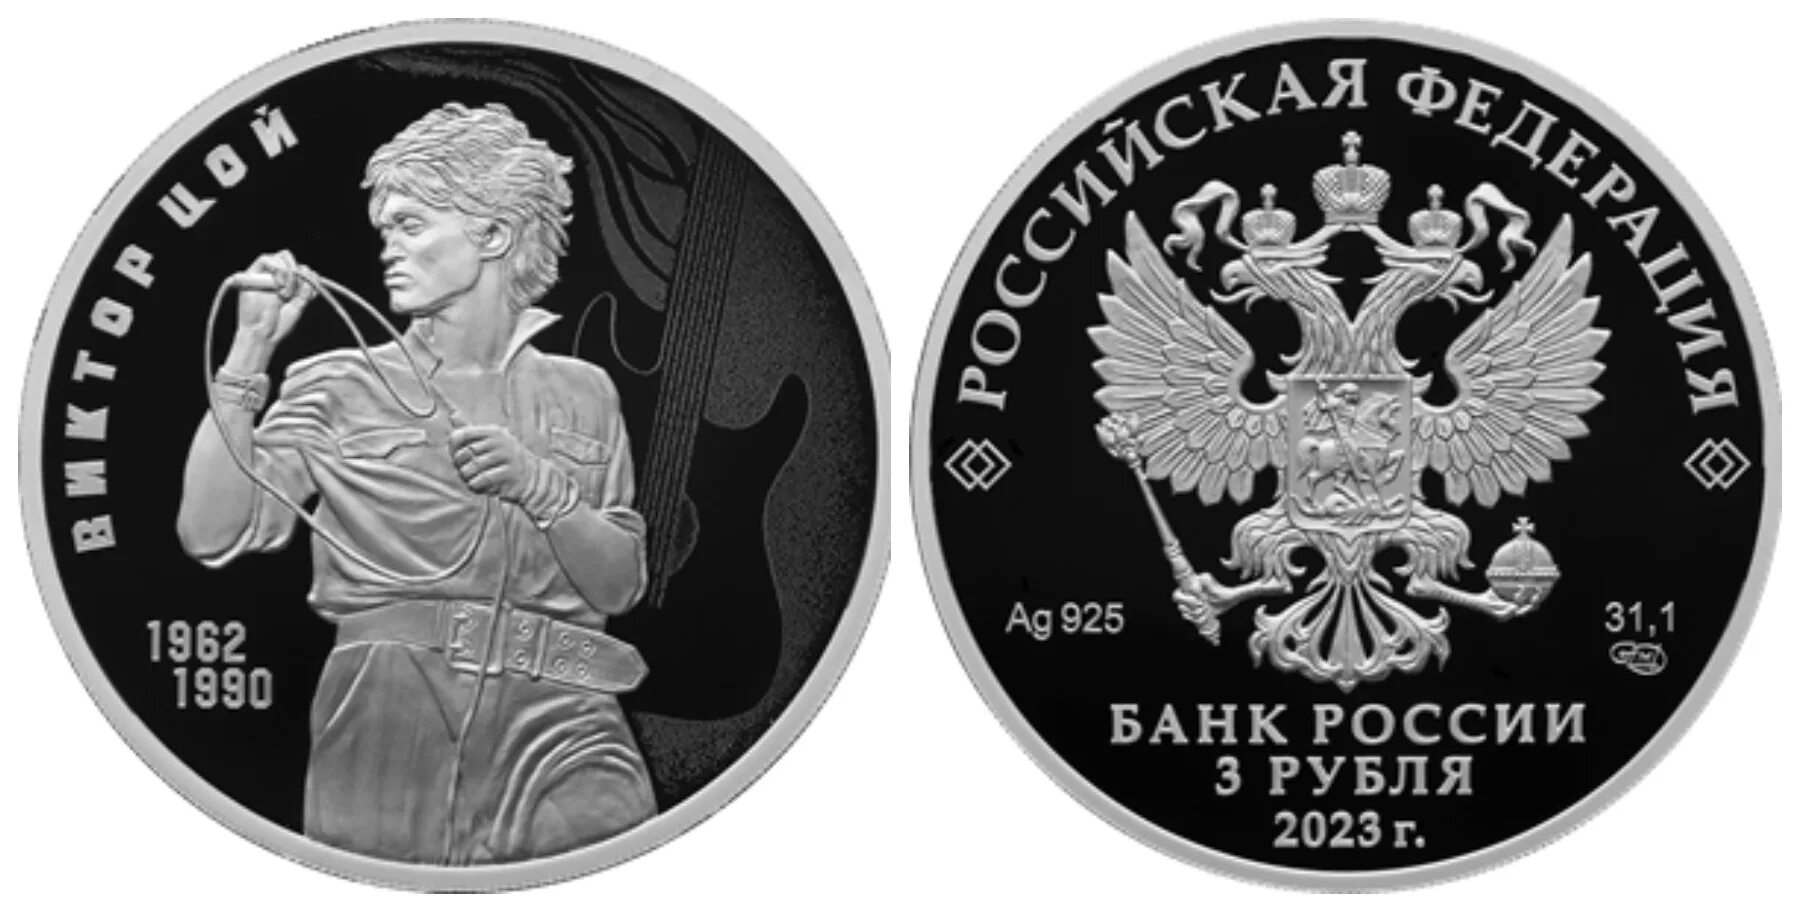 Трех рублевые монеты. Монета Цой 3 рубля. Серебряная монета 3 рубля. Юбилейные серебряные монеты. Памятная серебряная монета с Цоем.